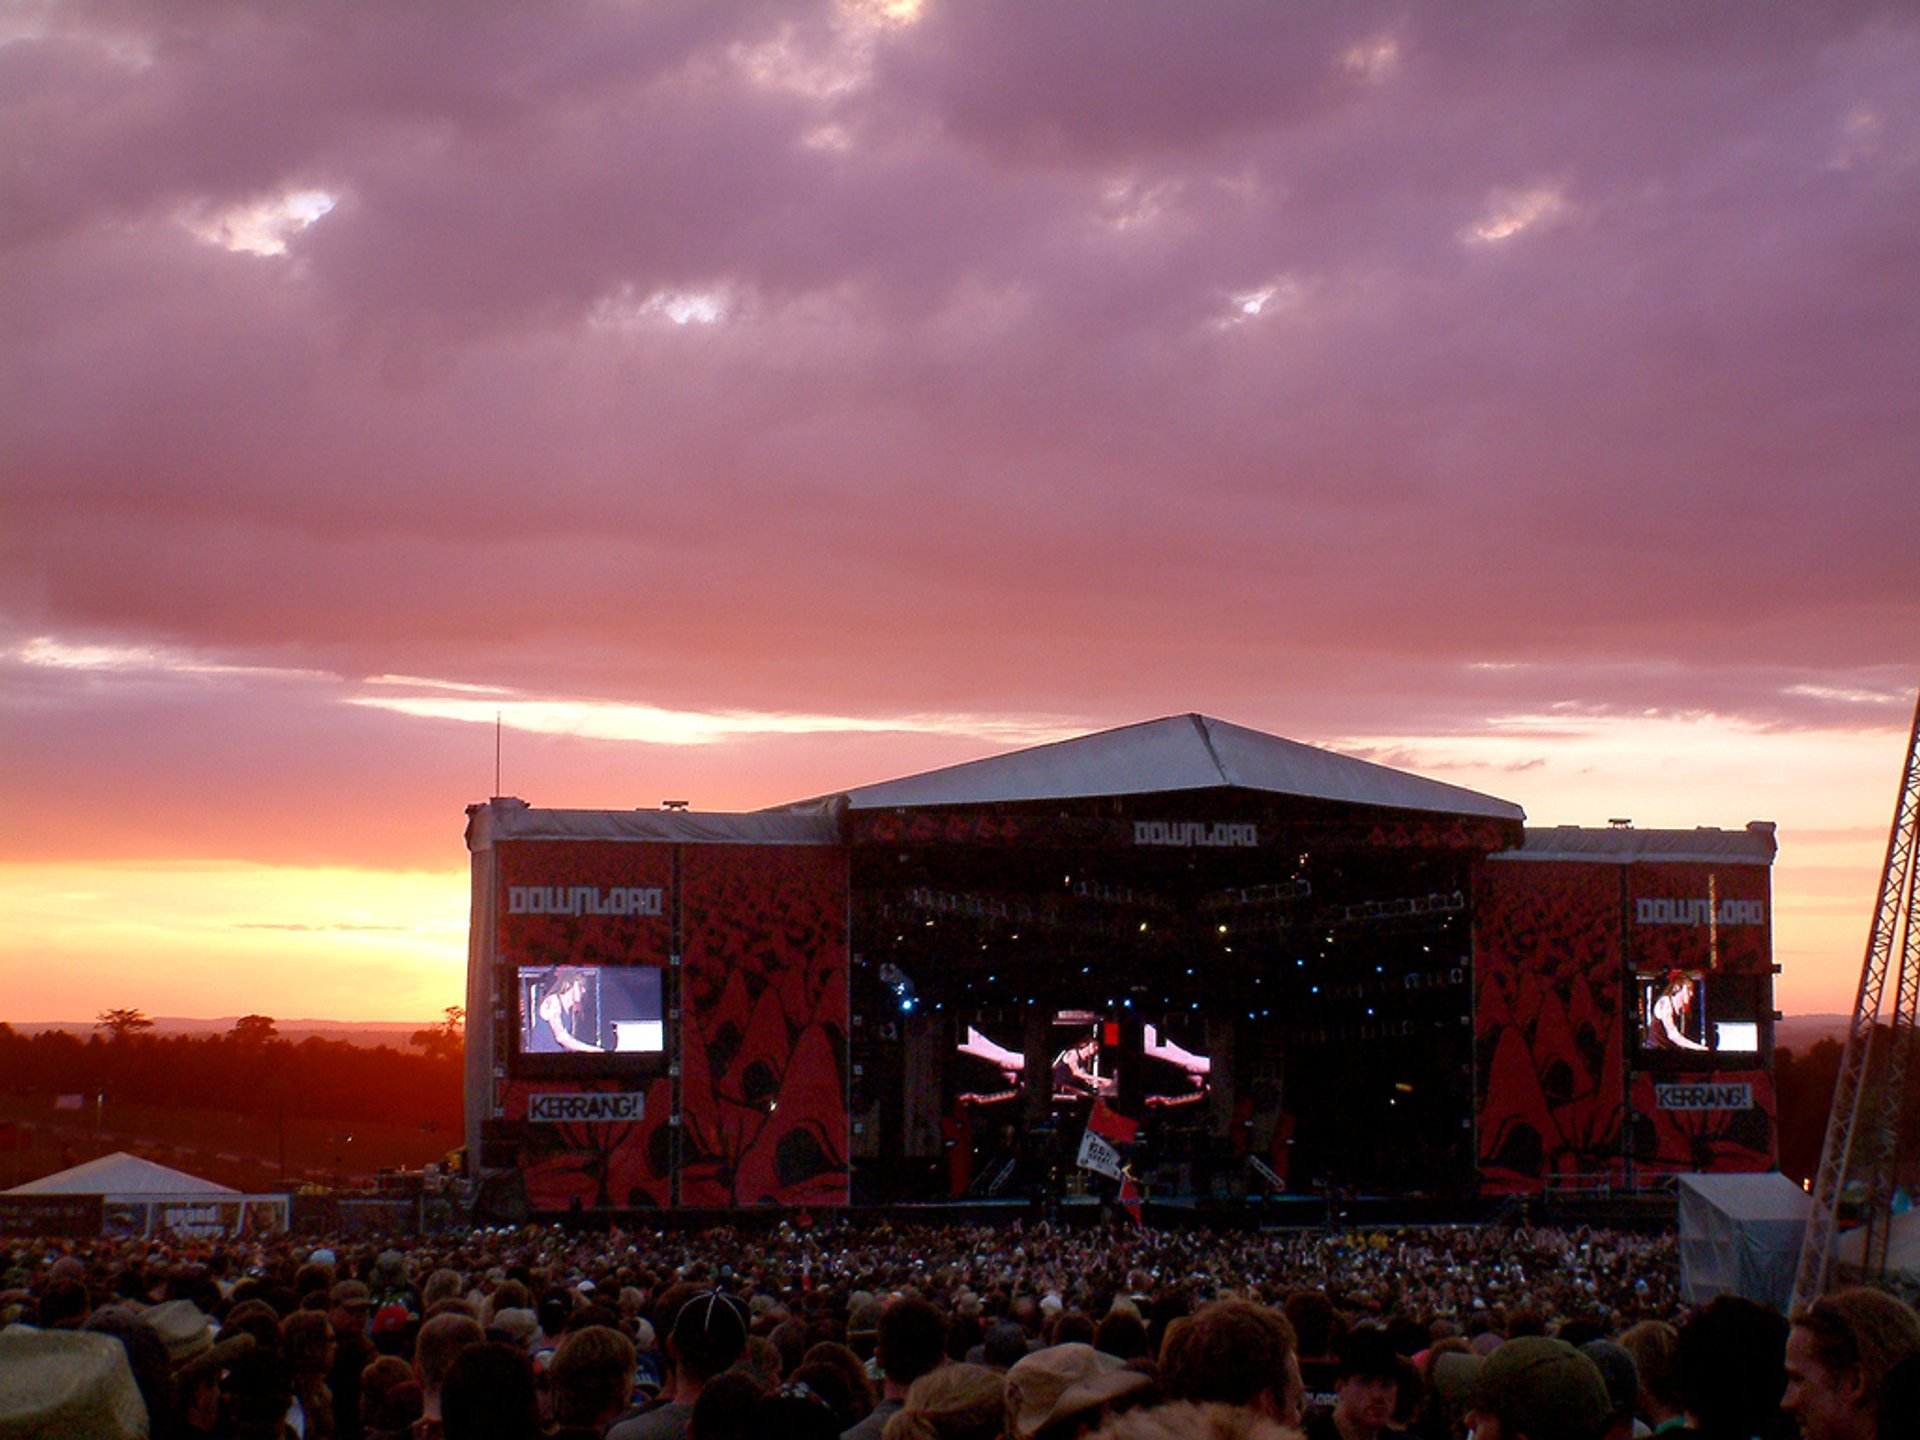 Download Festival 